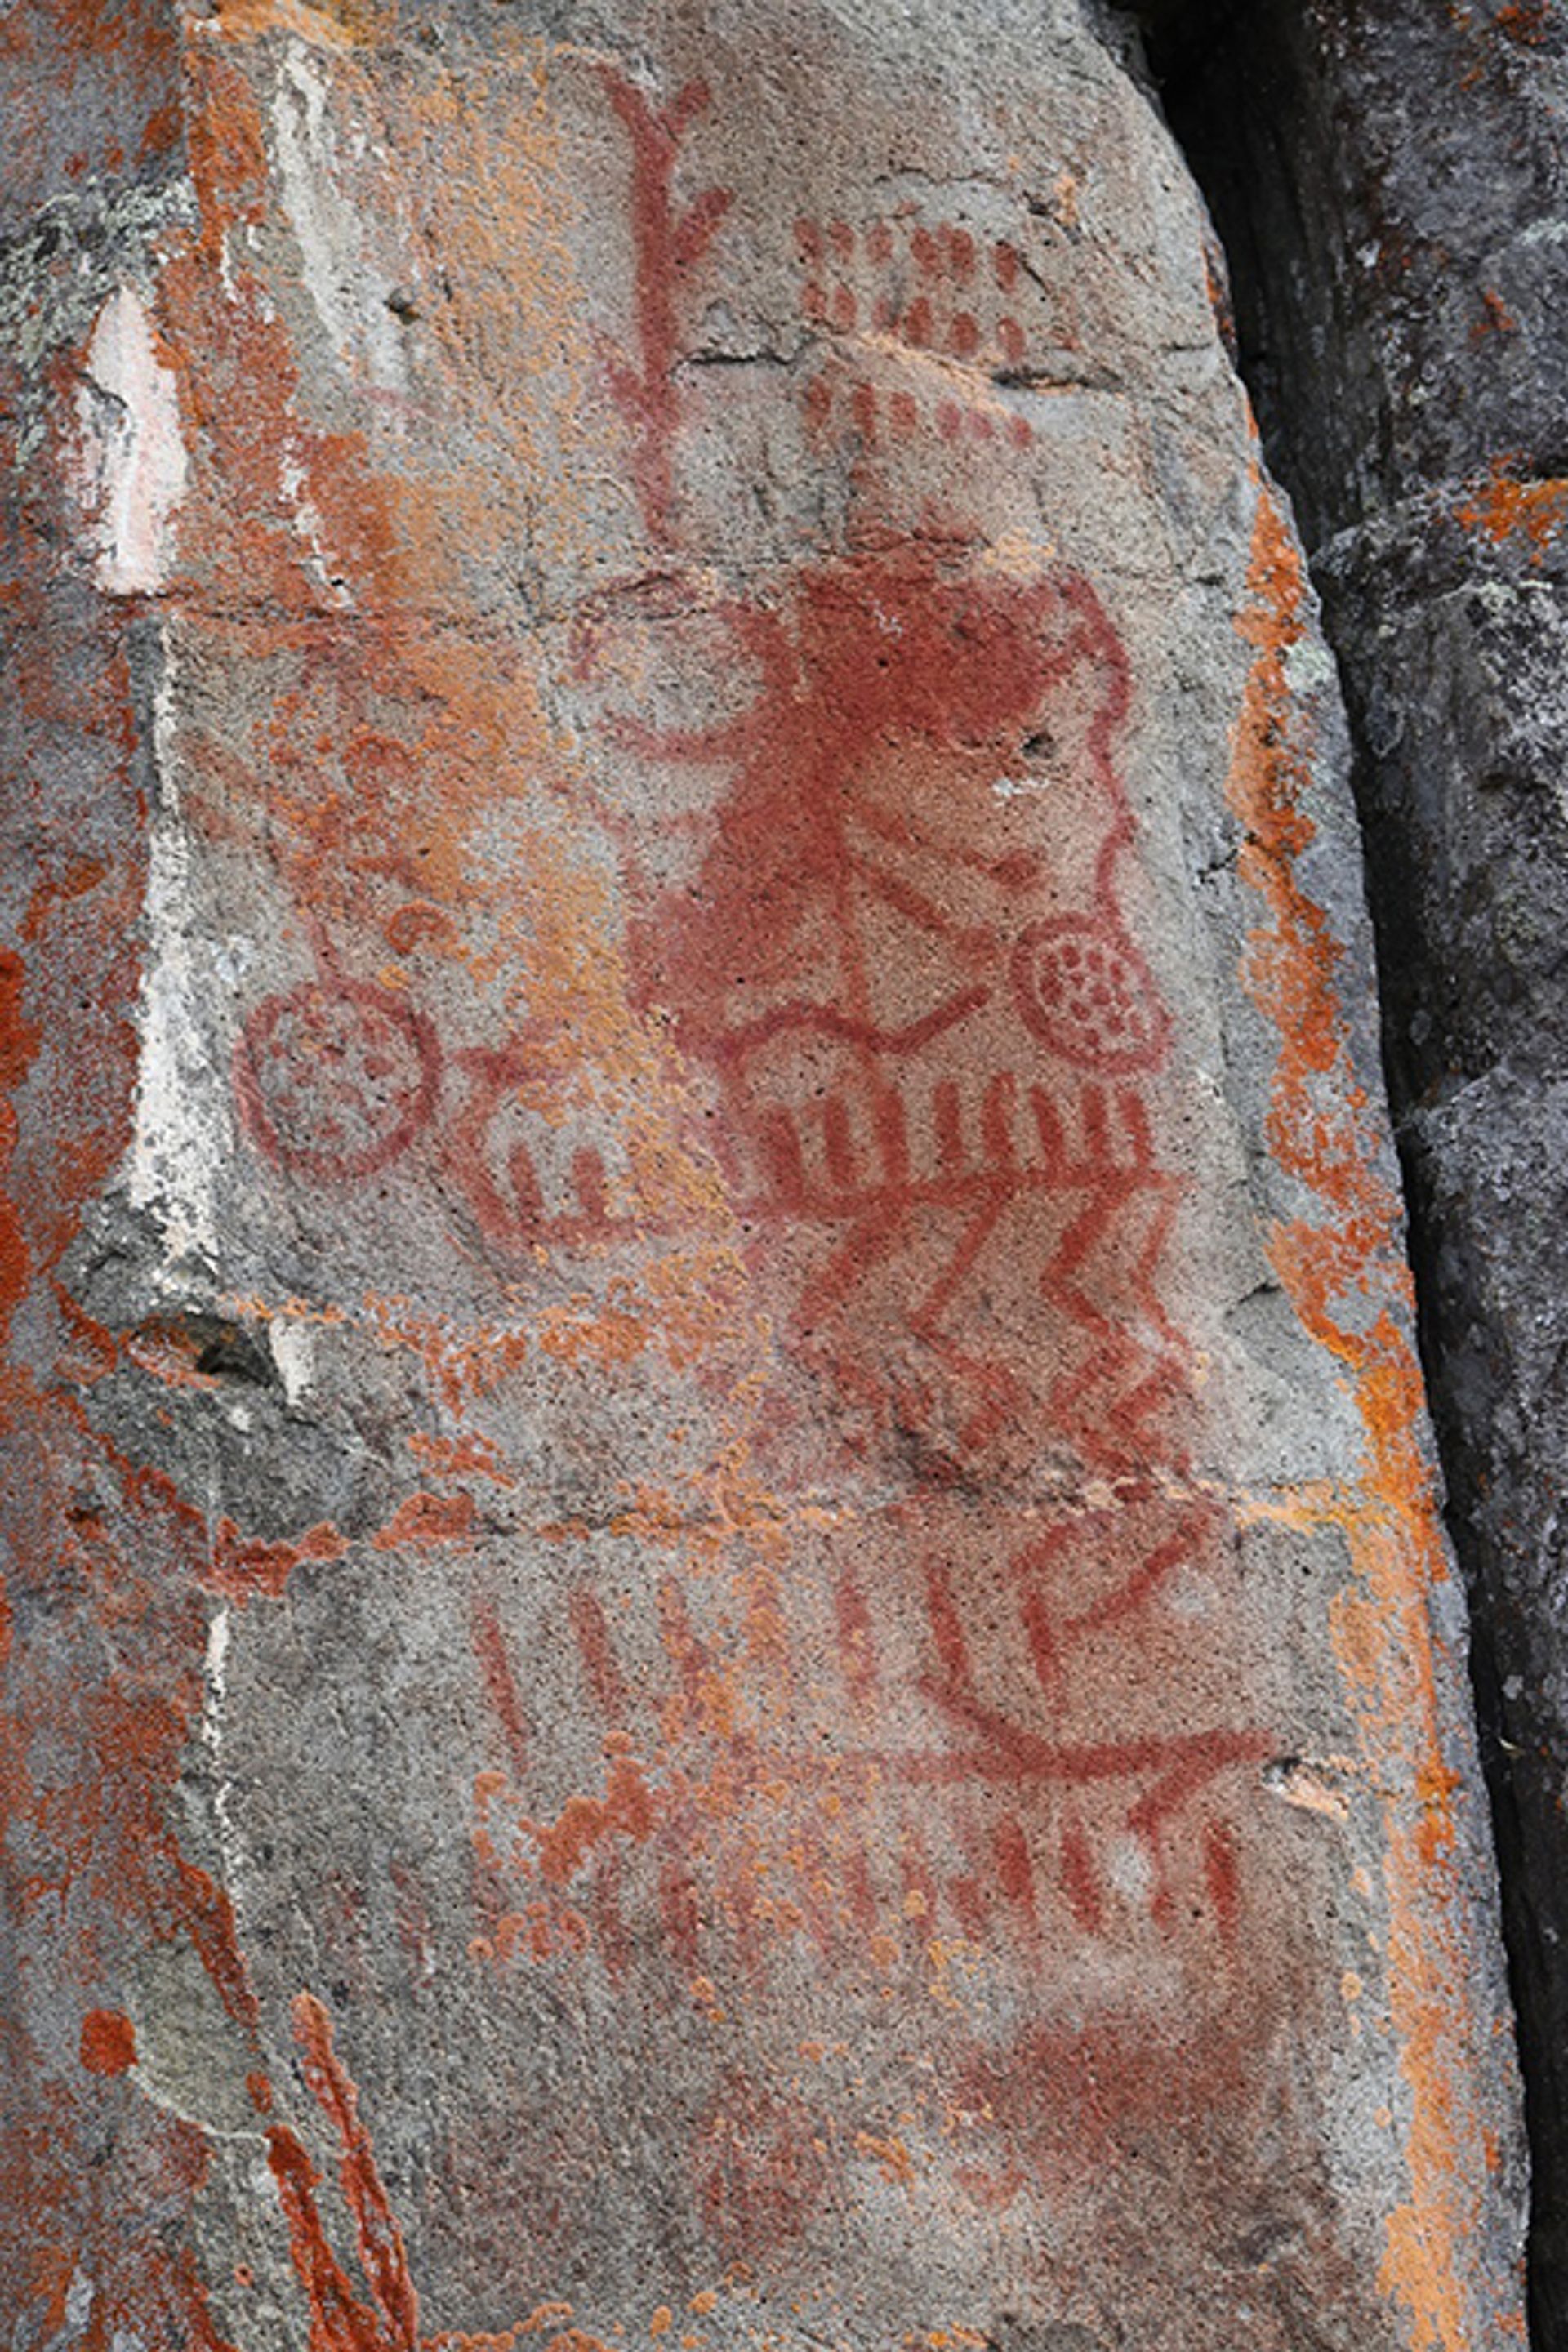 A sample of rock art found at Babine Lake in British Columbia Brandi MacDonald